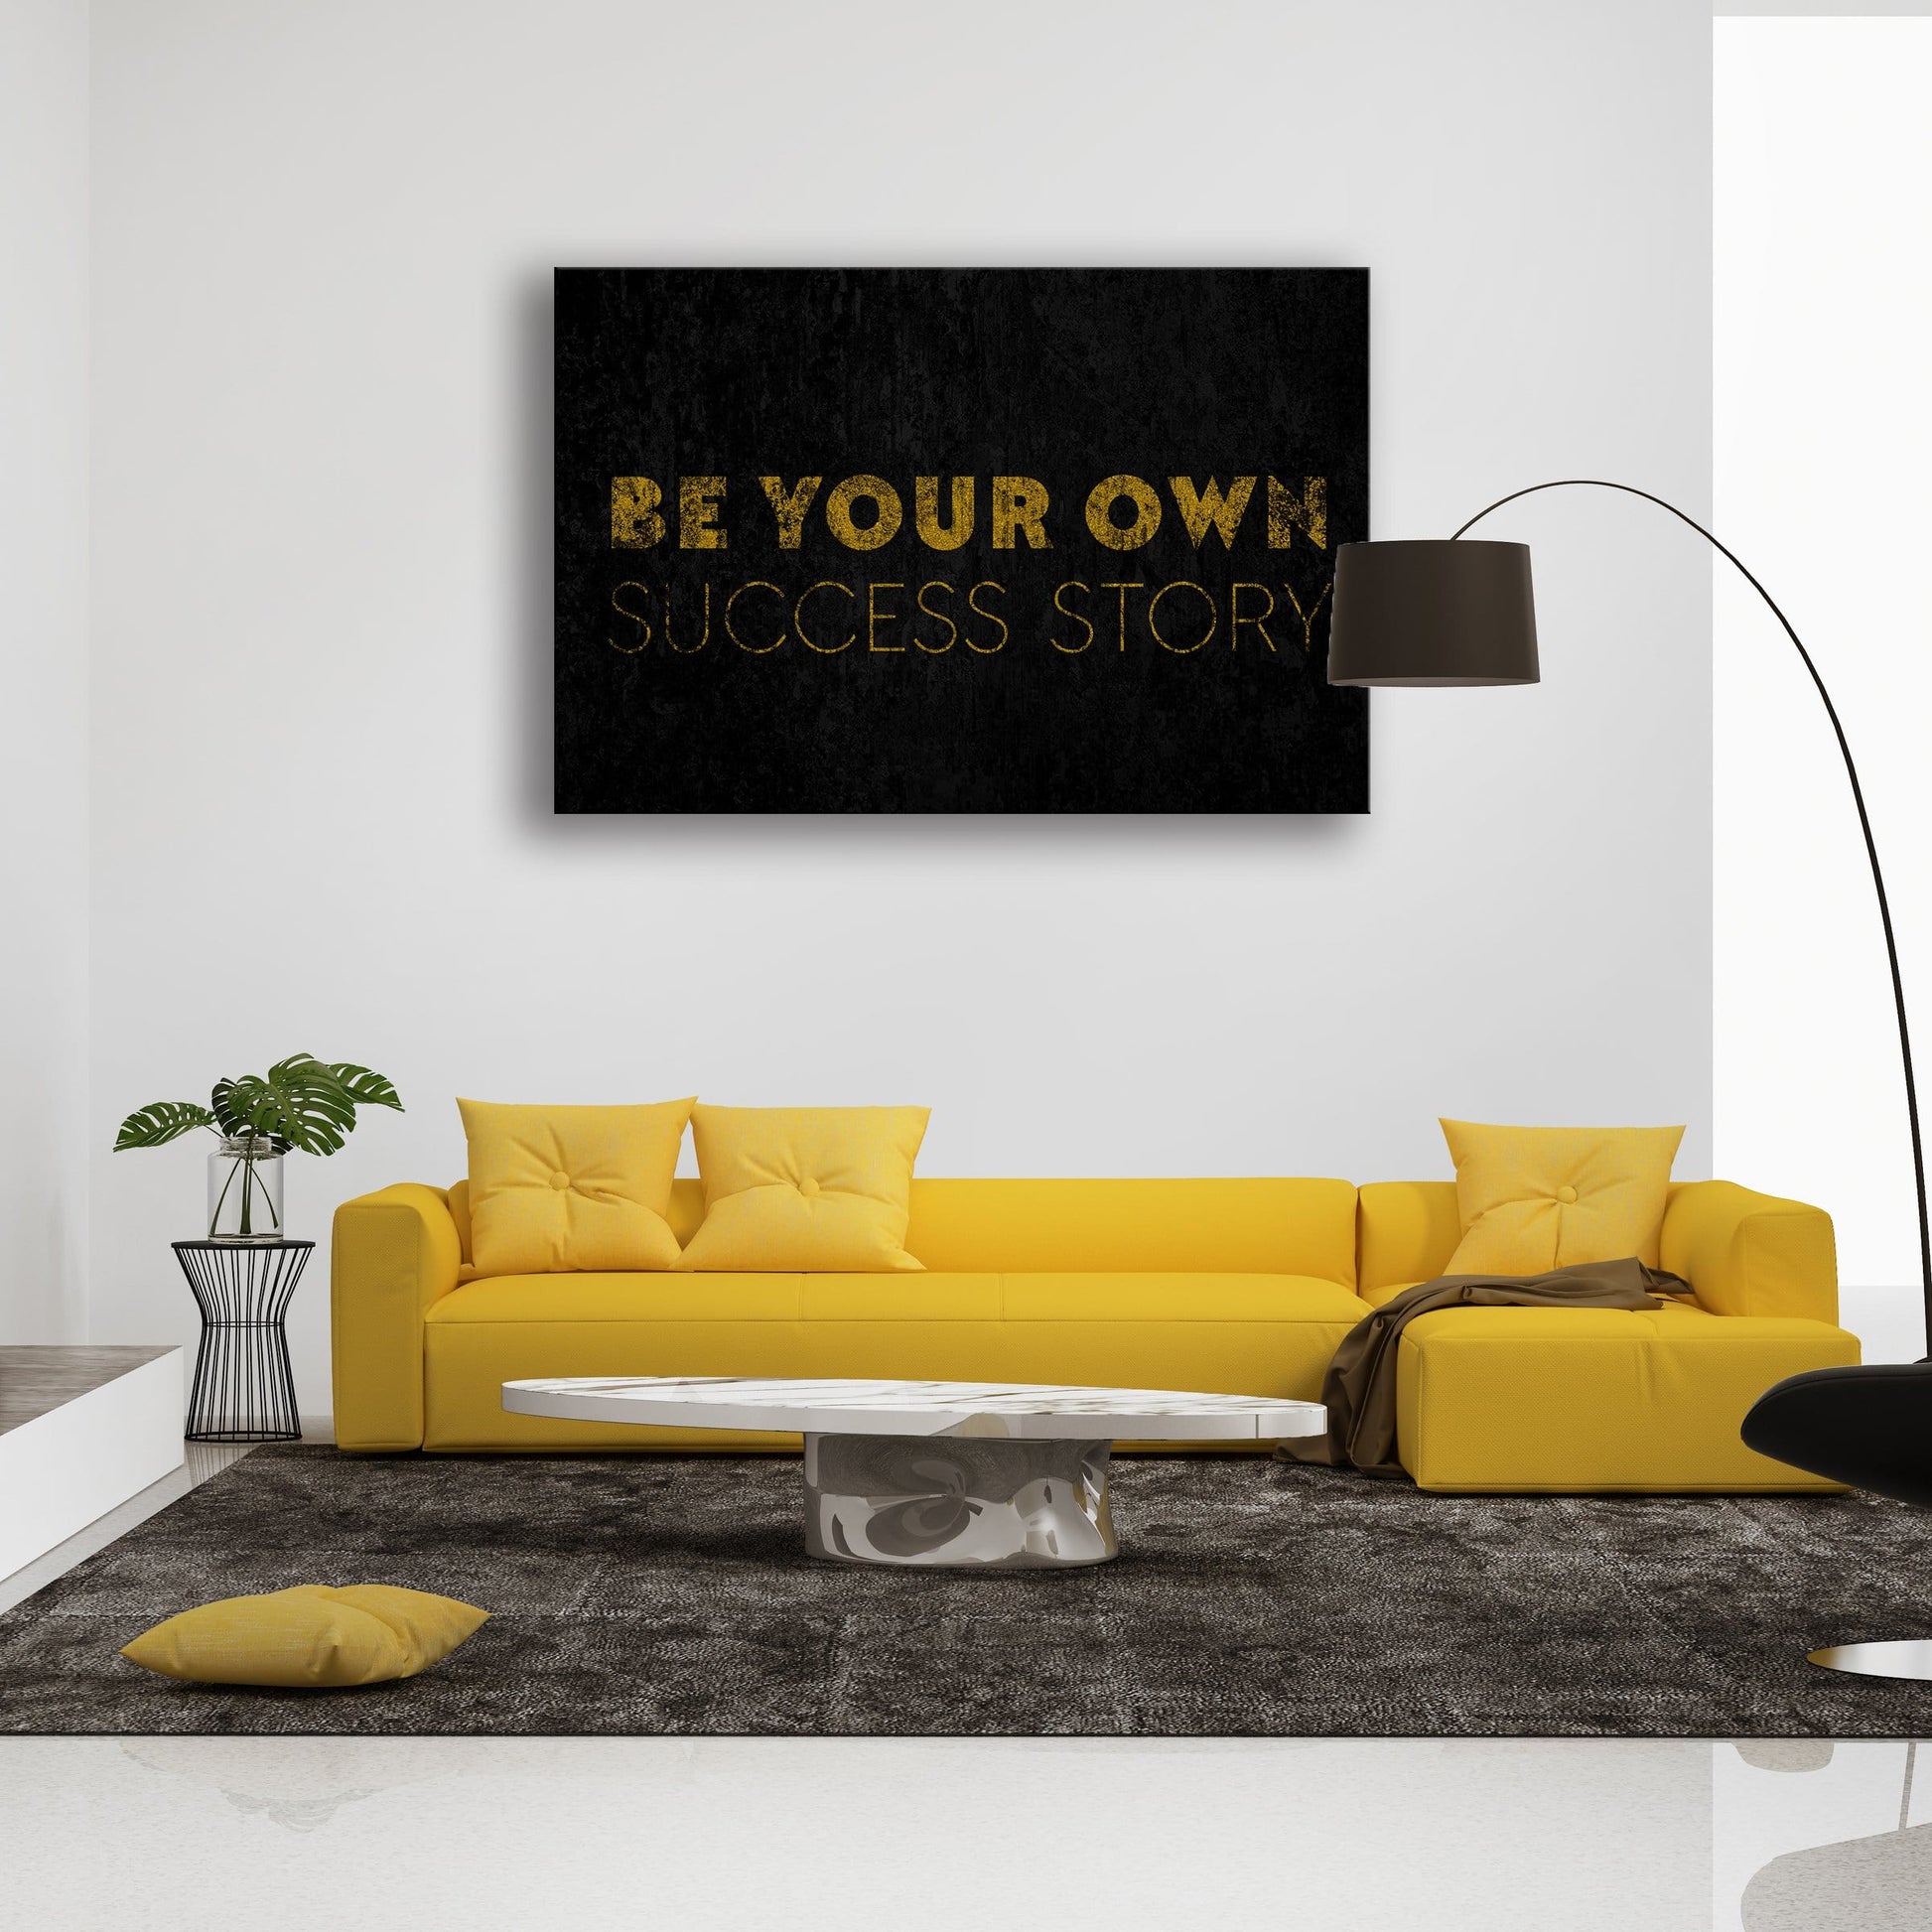 Be Your Own Success Story Wall Art | Inspirational Wall Art Motivational Wall Art Quotes Office Art | ImpaktMaker Exclusive Canvas Art Landscape